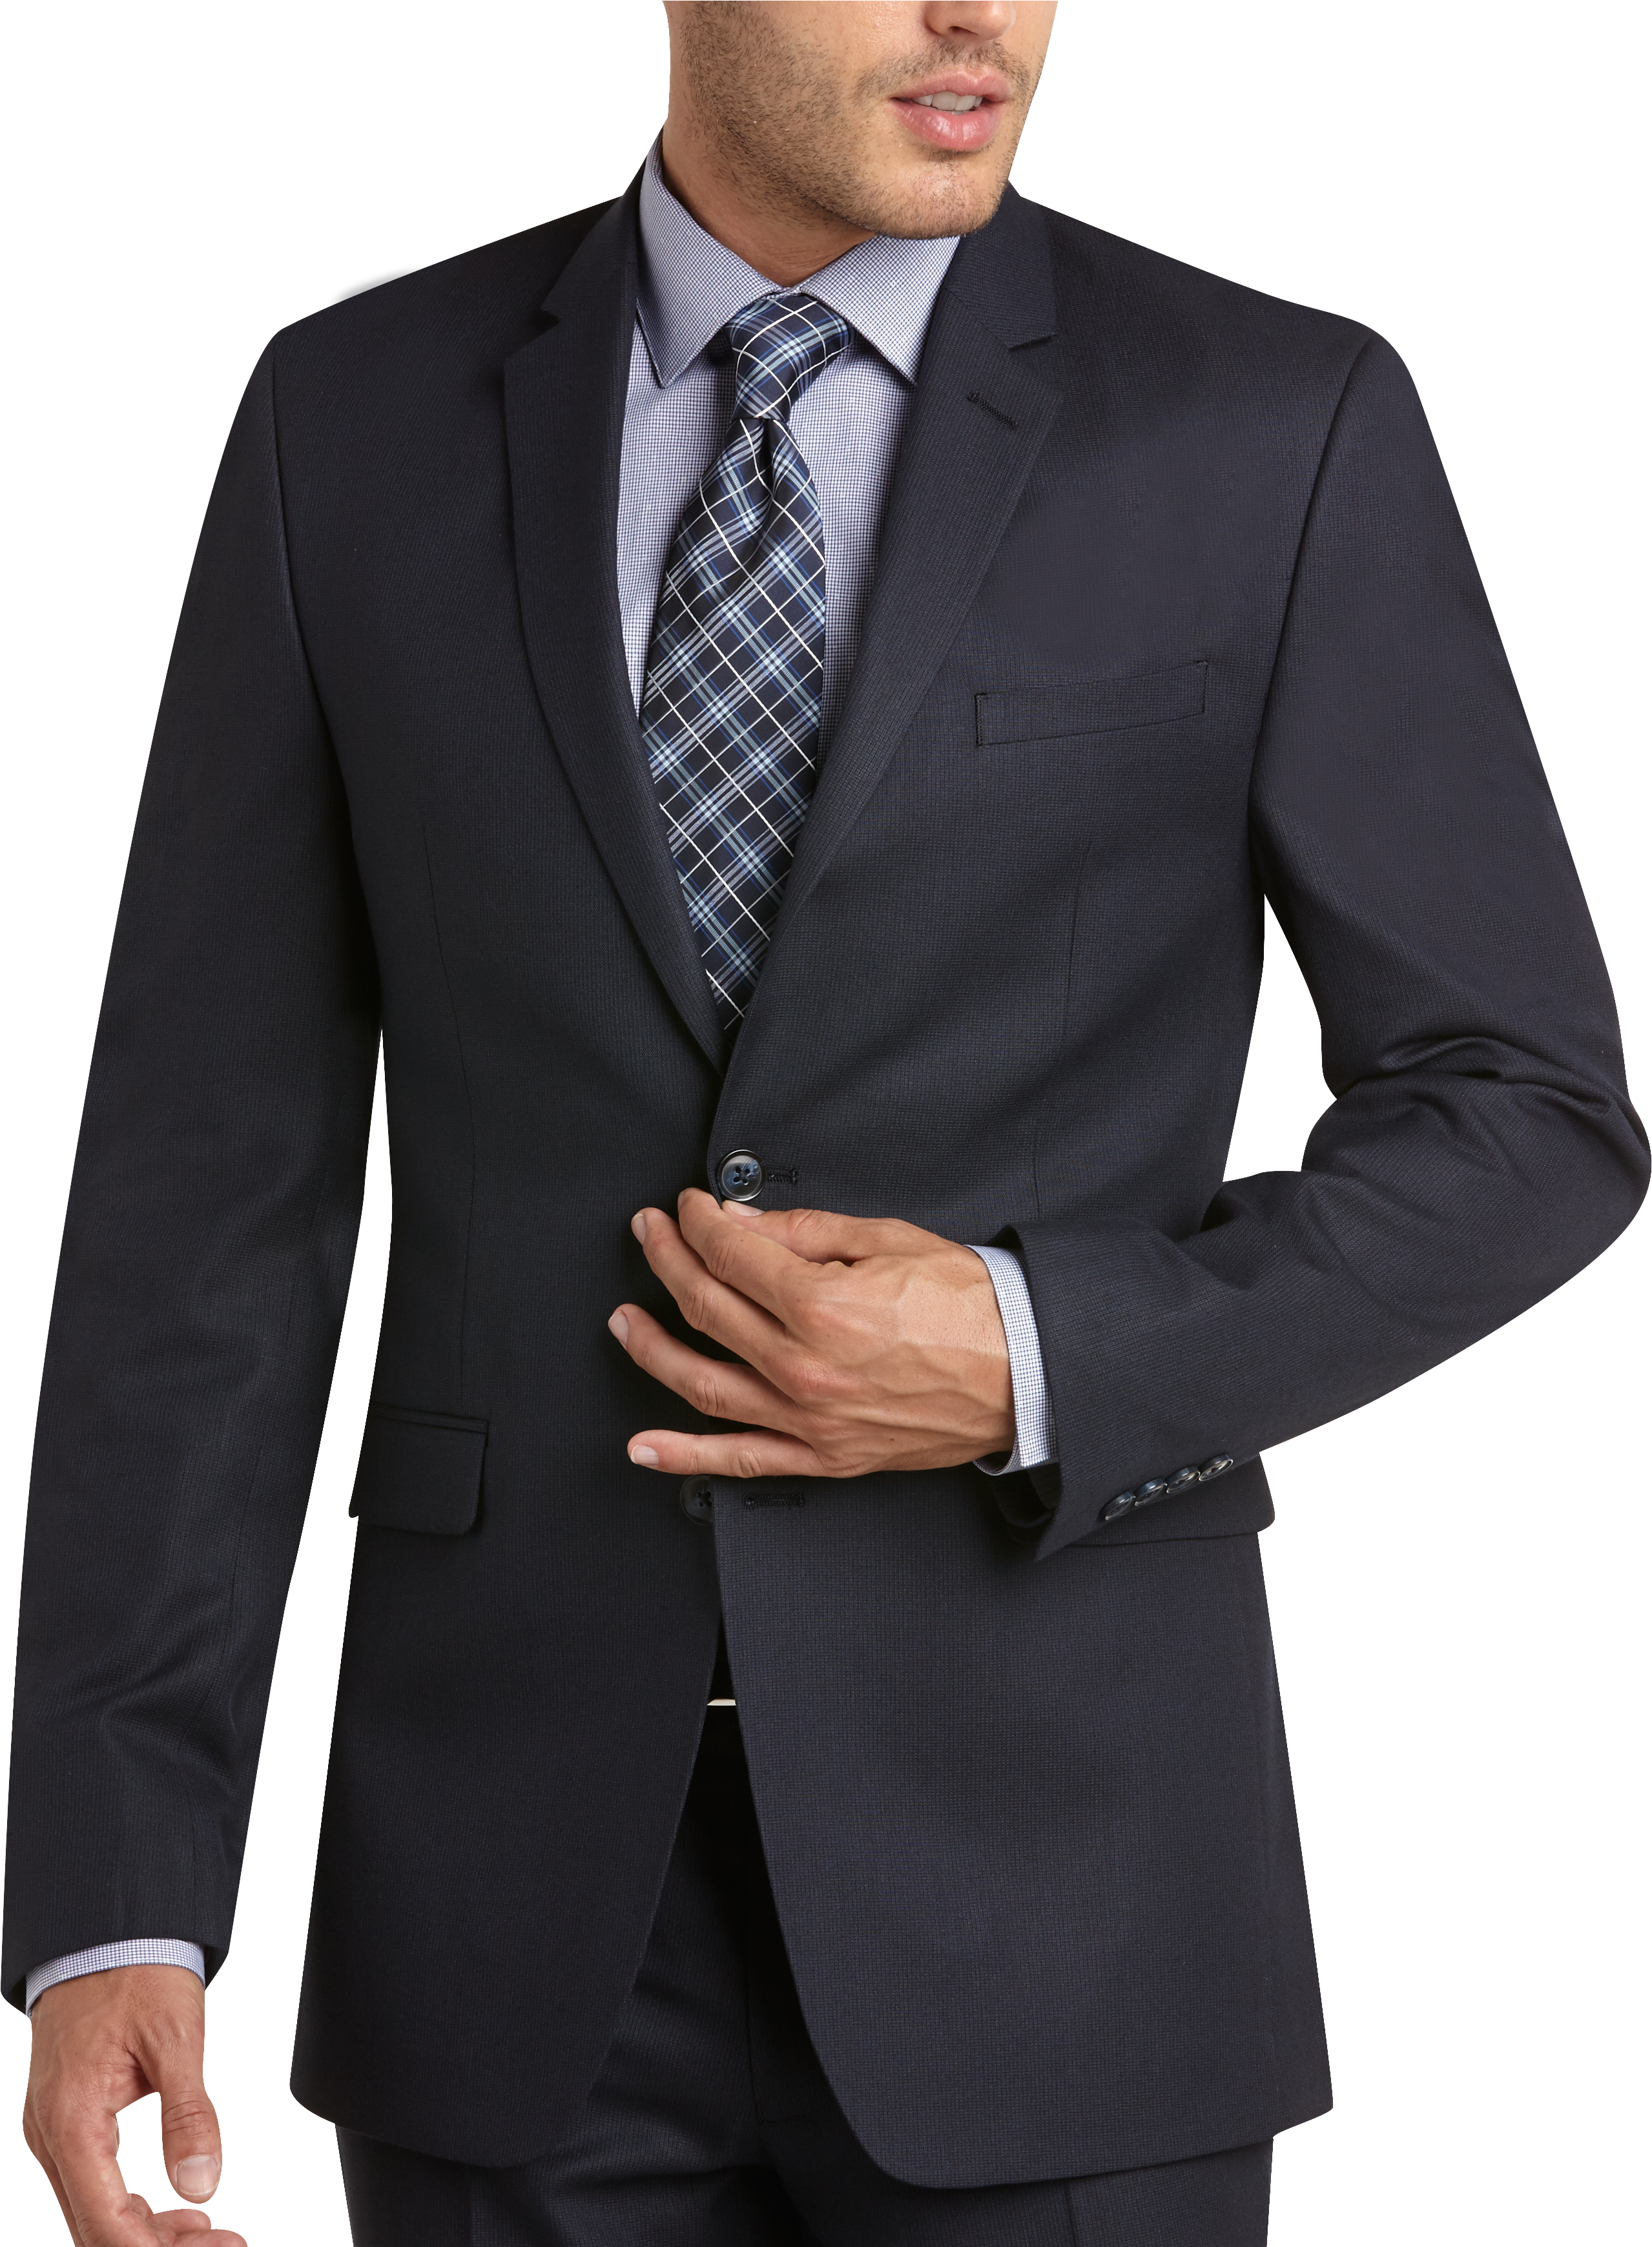 Perry Ellis Portfolio Navy Extreme Slim Fit Suit (Outlet) - Extreme ...